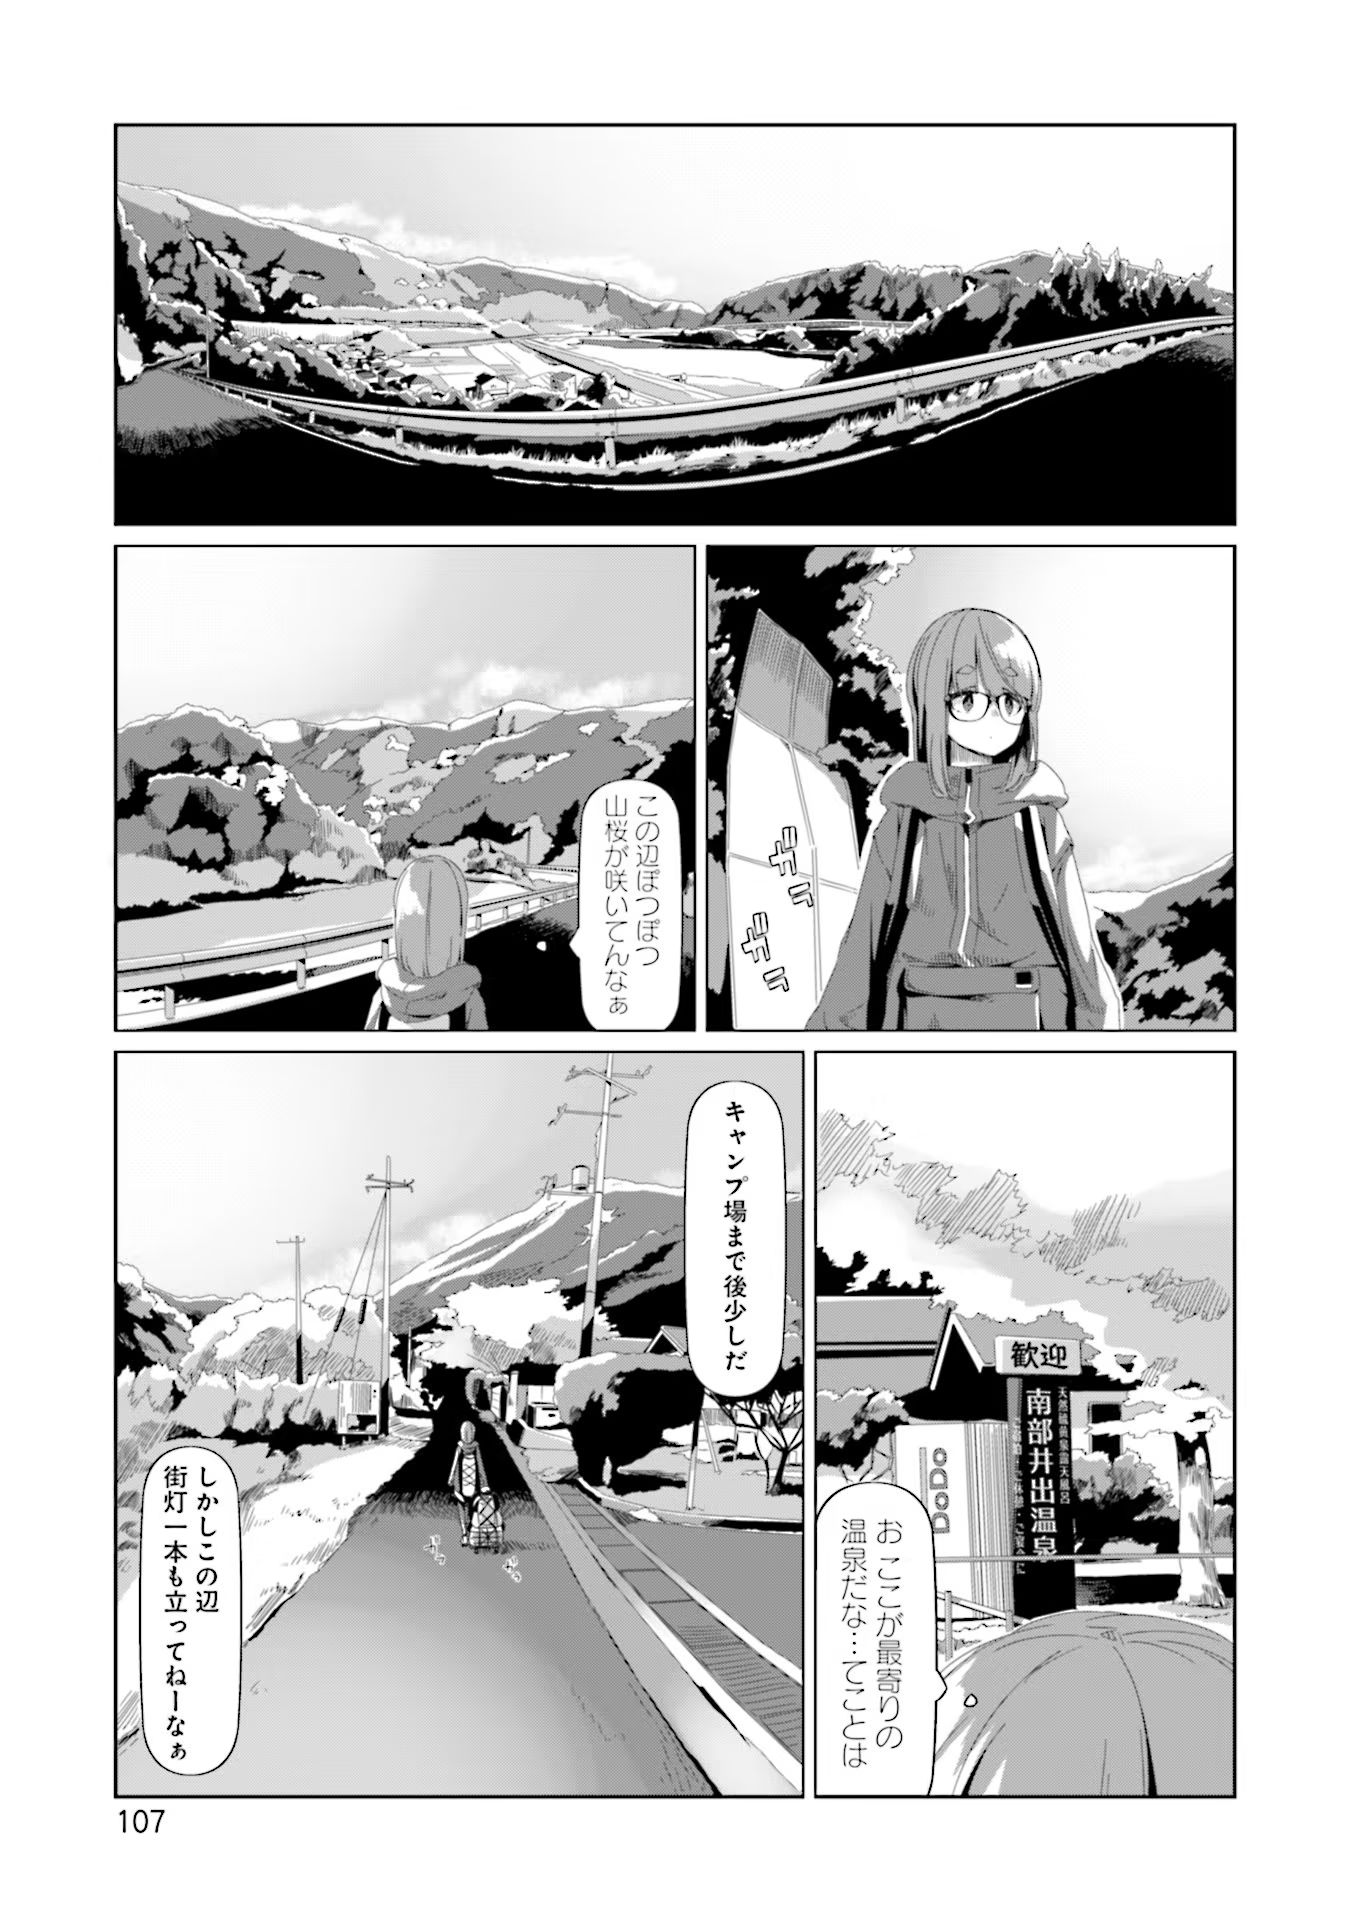 Yuru Camp - Chapter 74 - Page 1